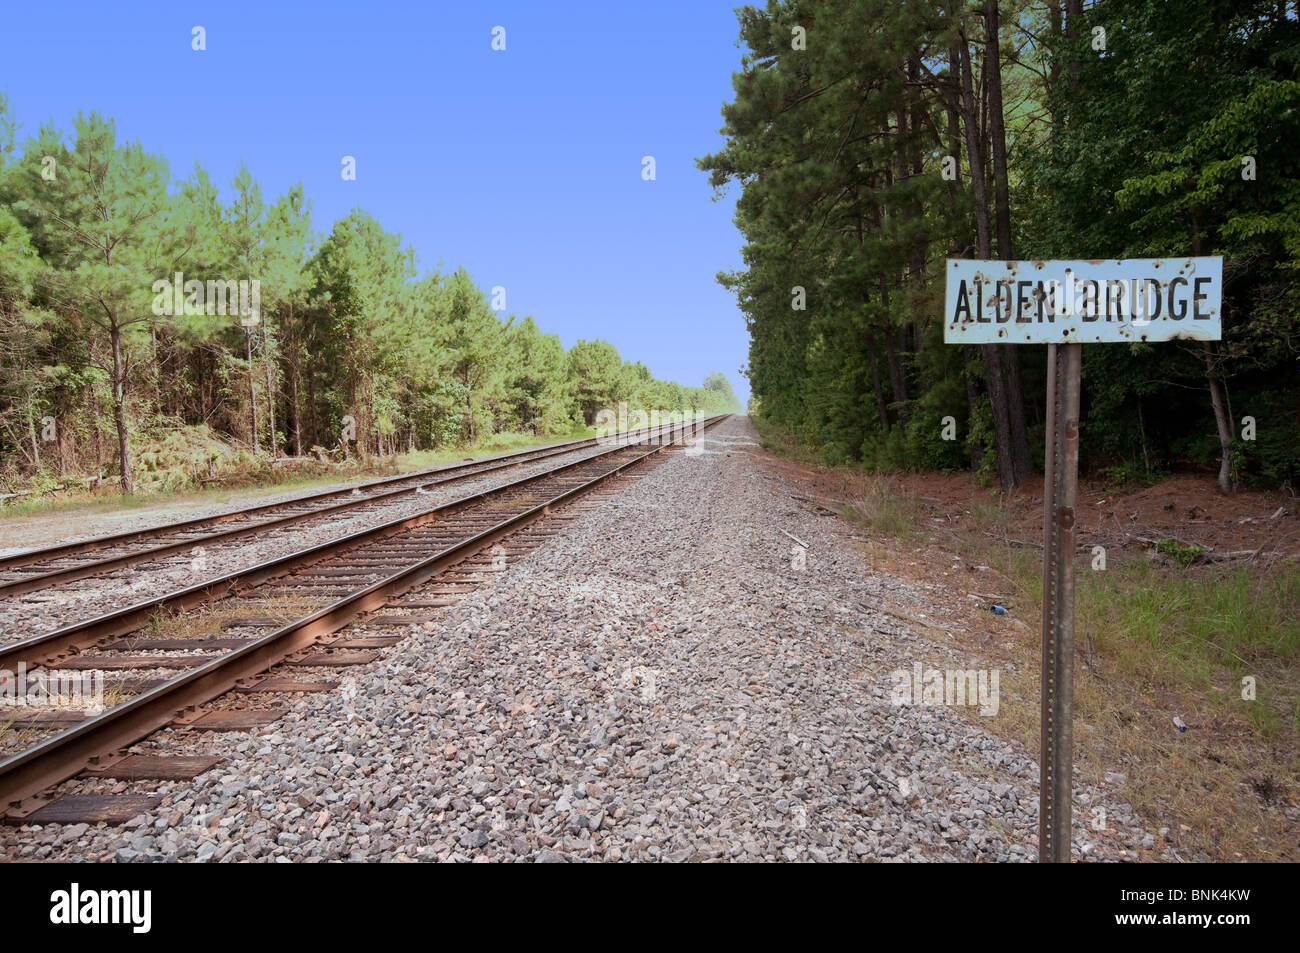 Alden Bridge Railroad Crossing Stock Photo